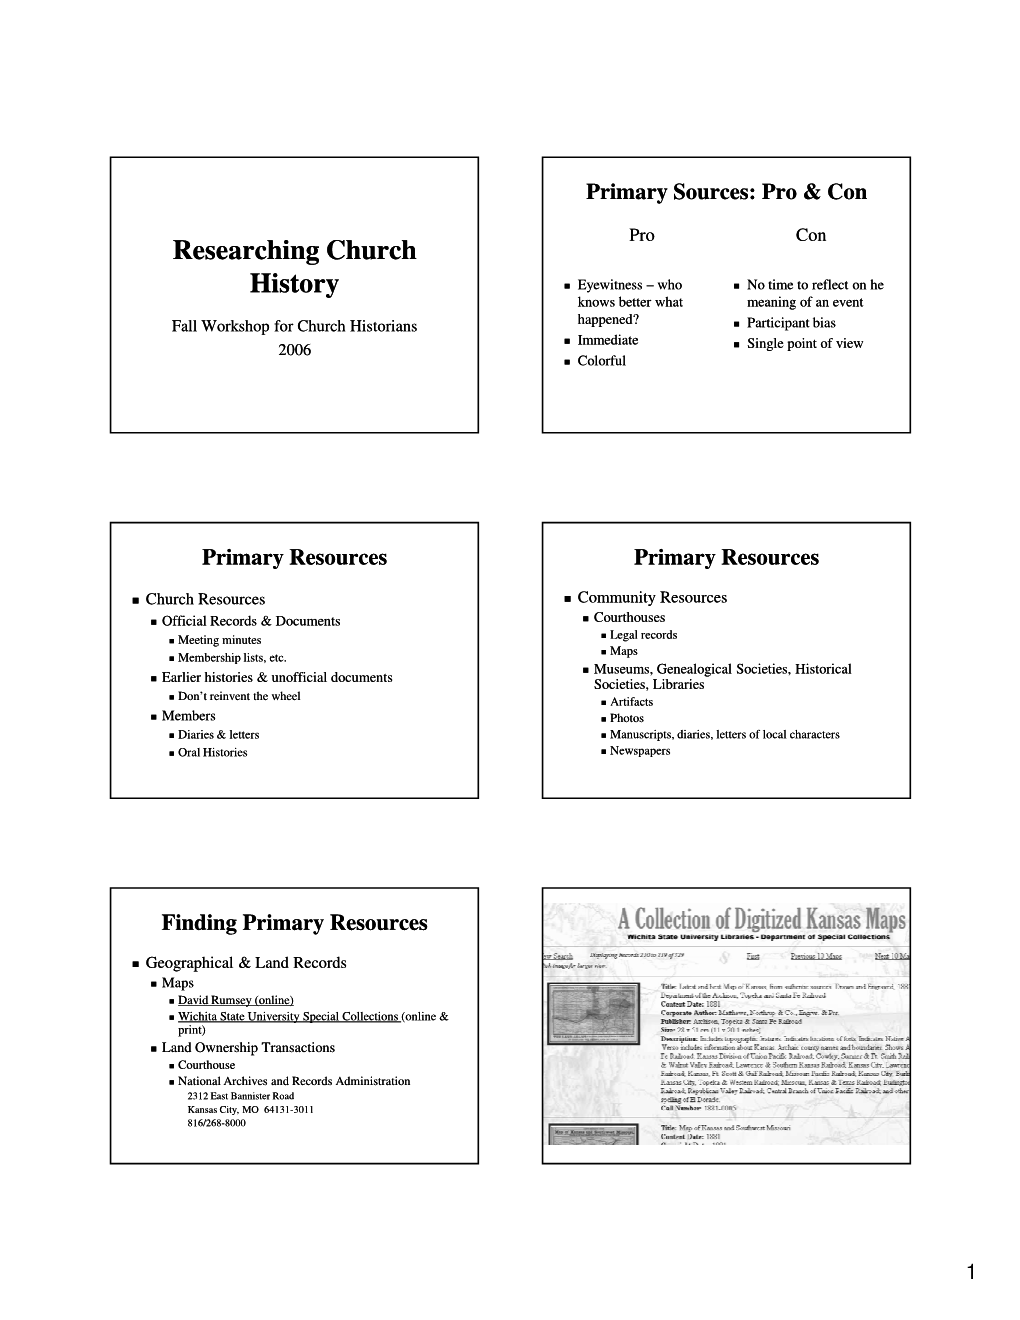 Researching Church History